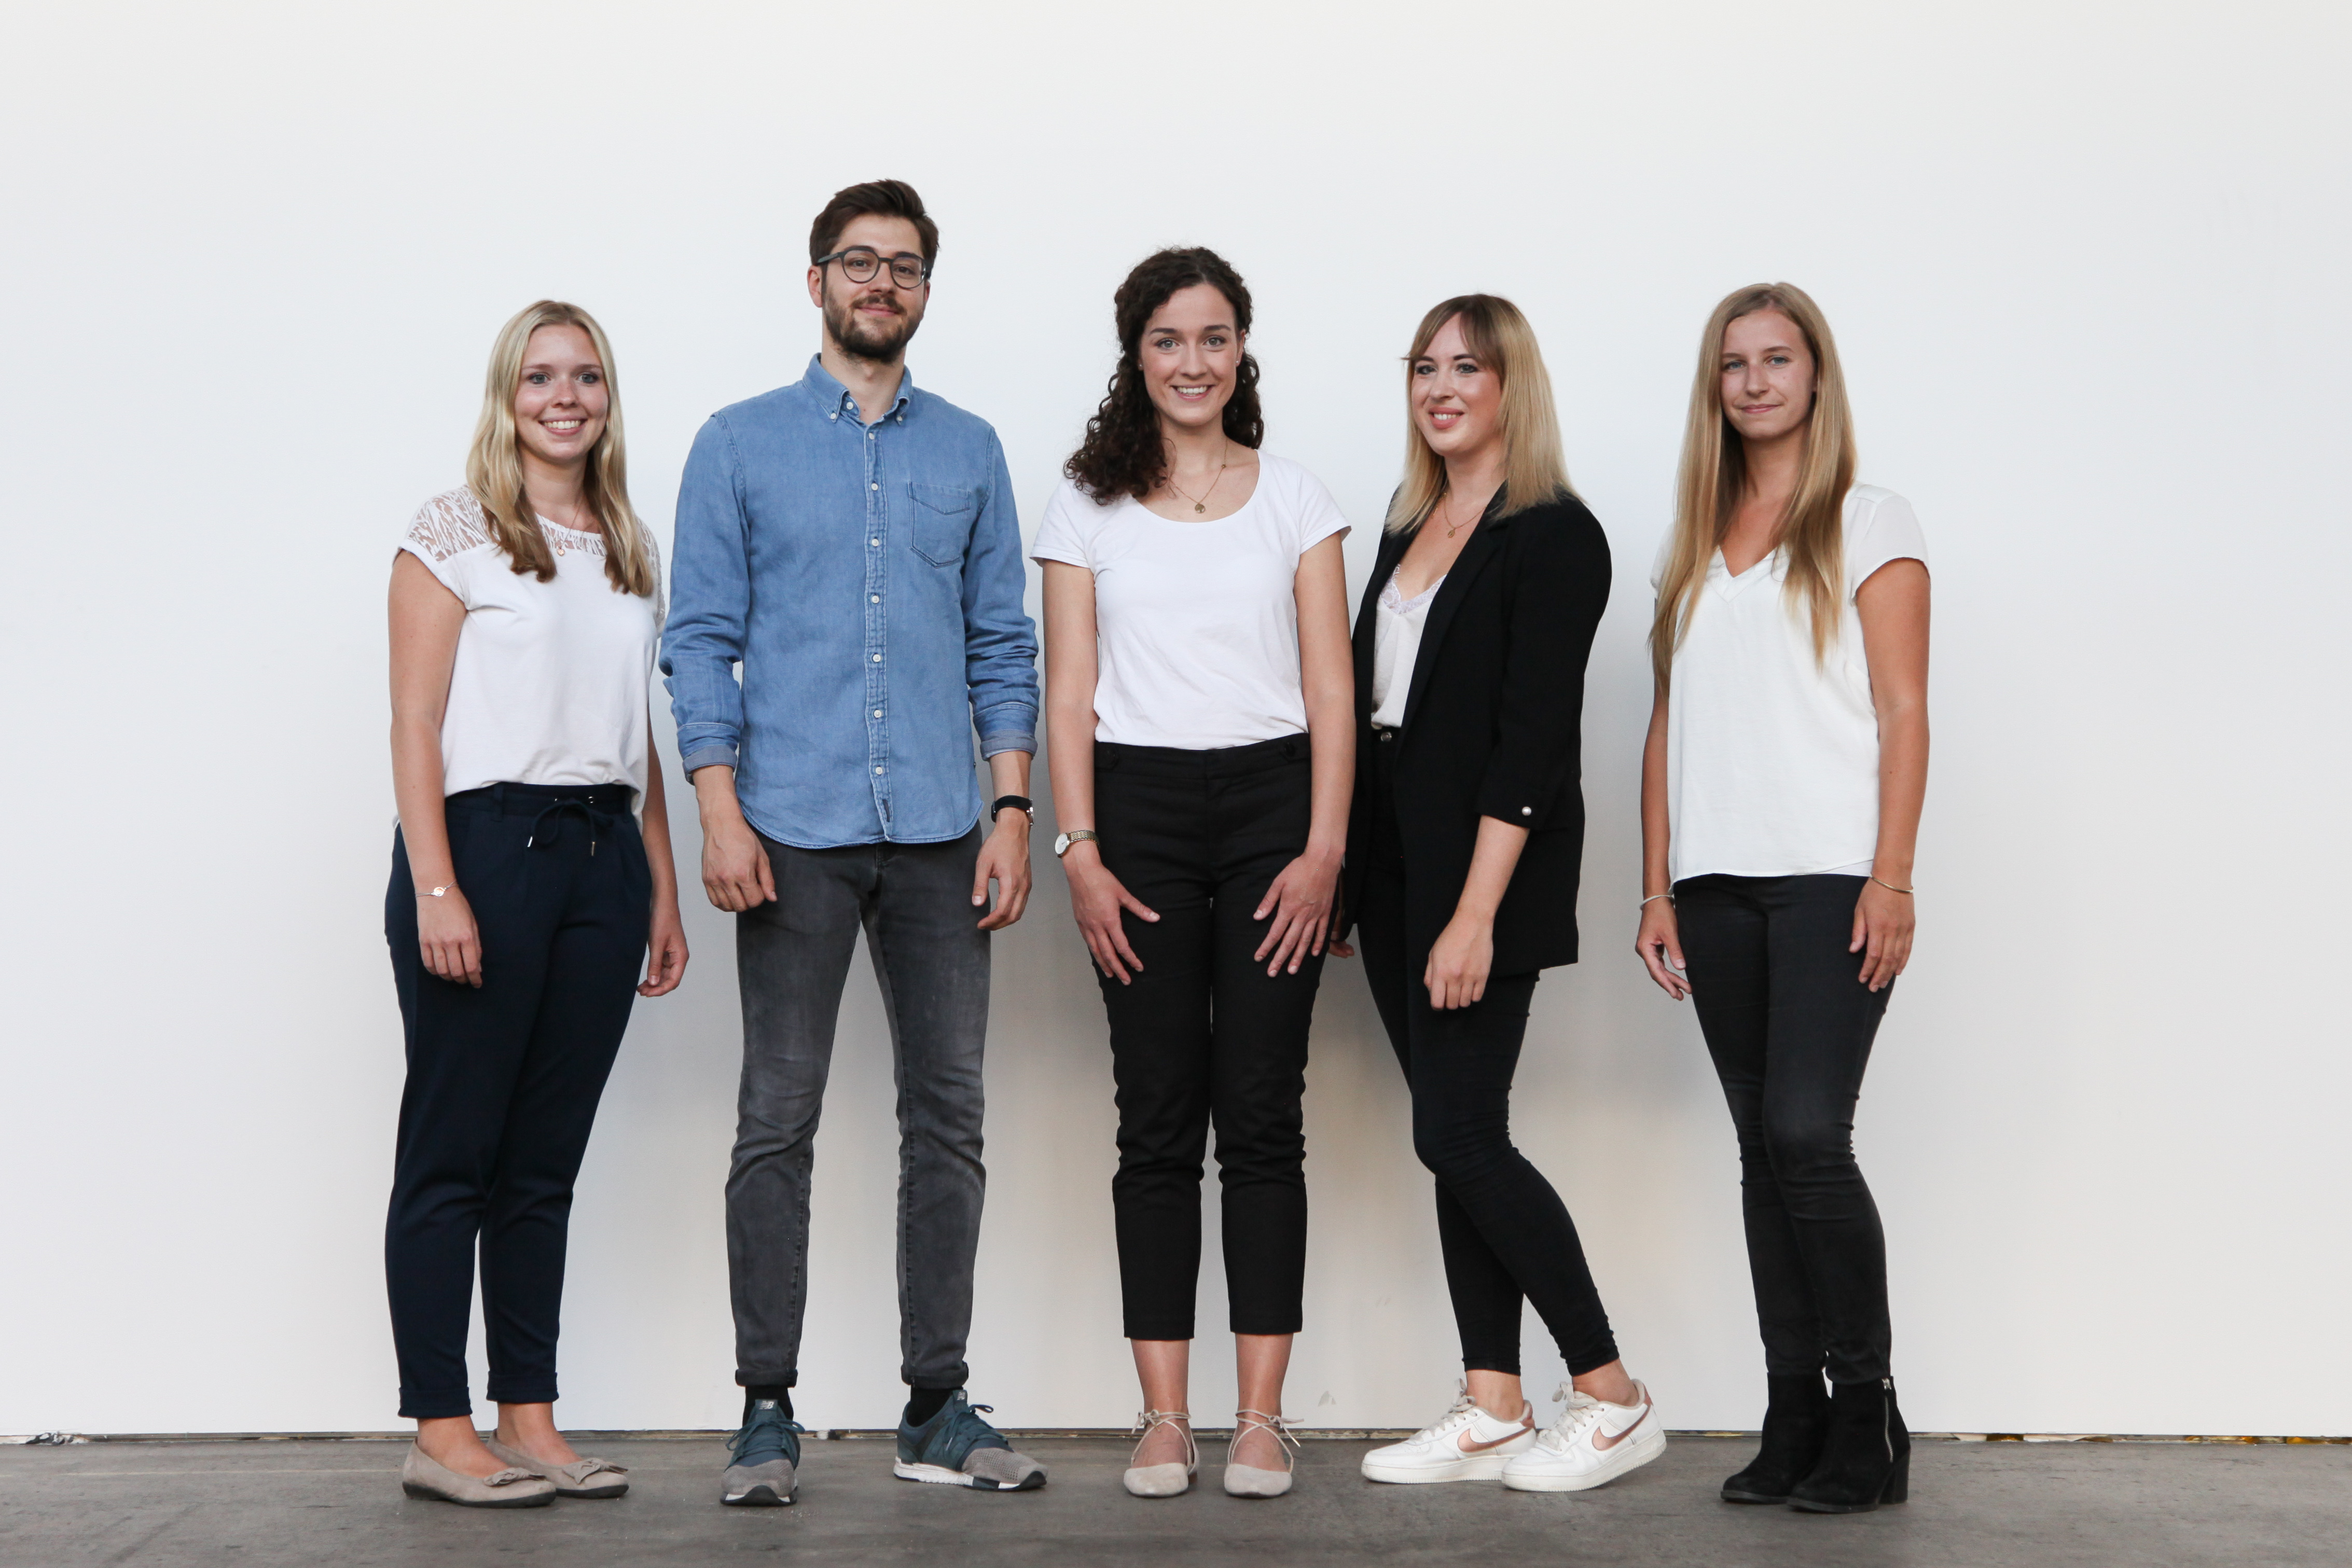 Das Vorstands-Team 2018 - 2019: Karolin Huber, Raphael Jahn, Eleni Schlossnikel, Lisa Gast und Kathrin Schmidtke (v.l.n.r.)